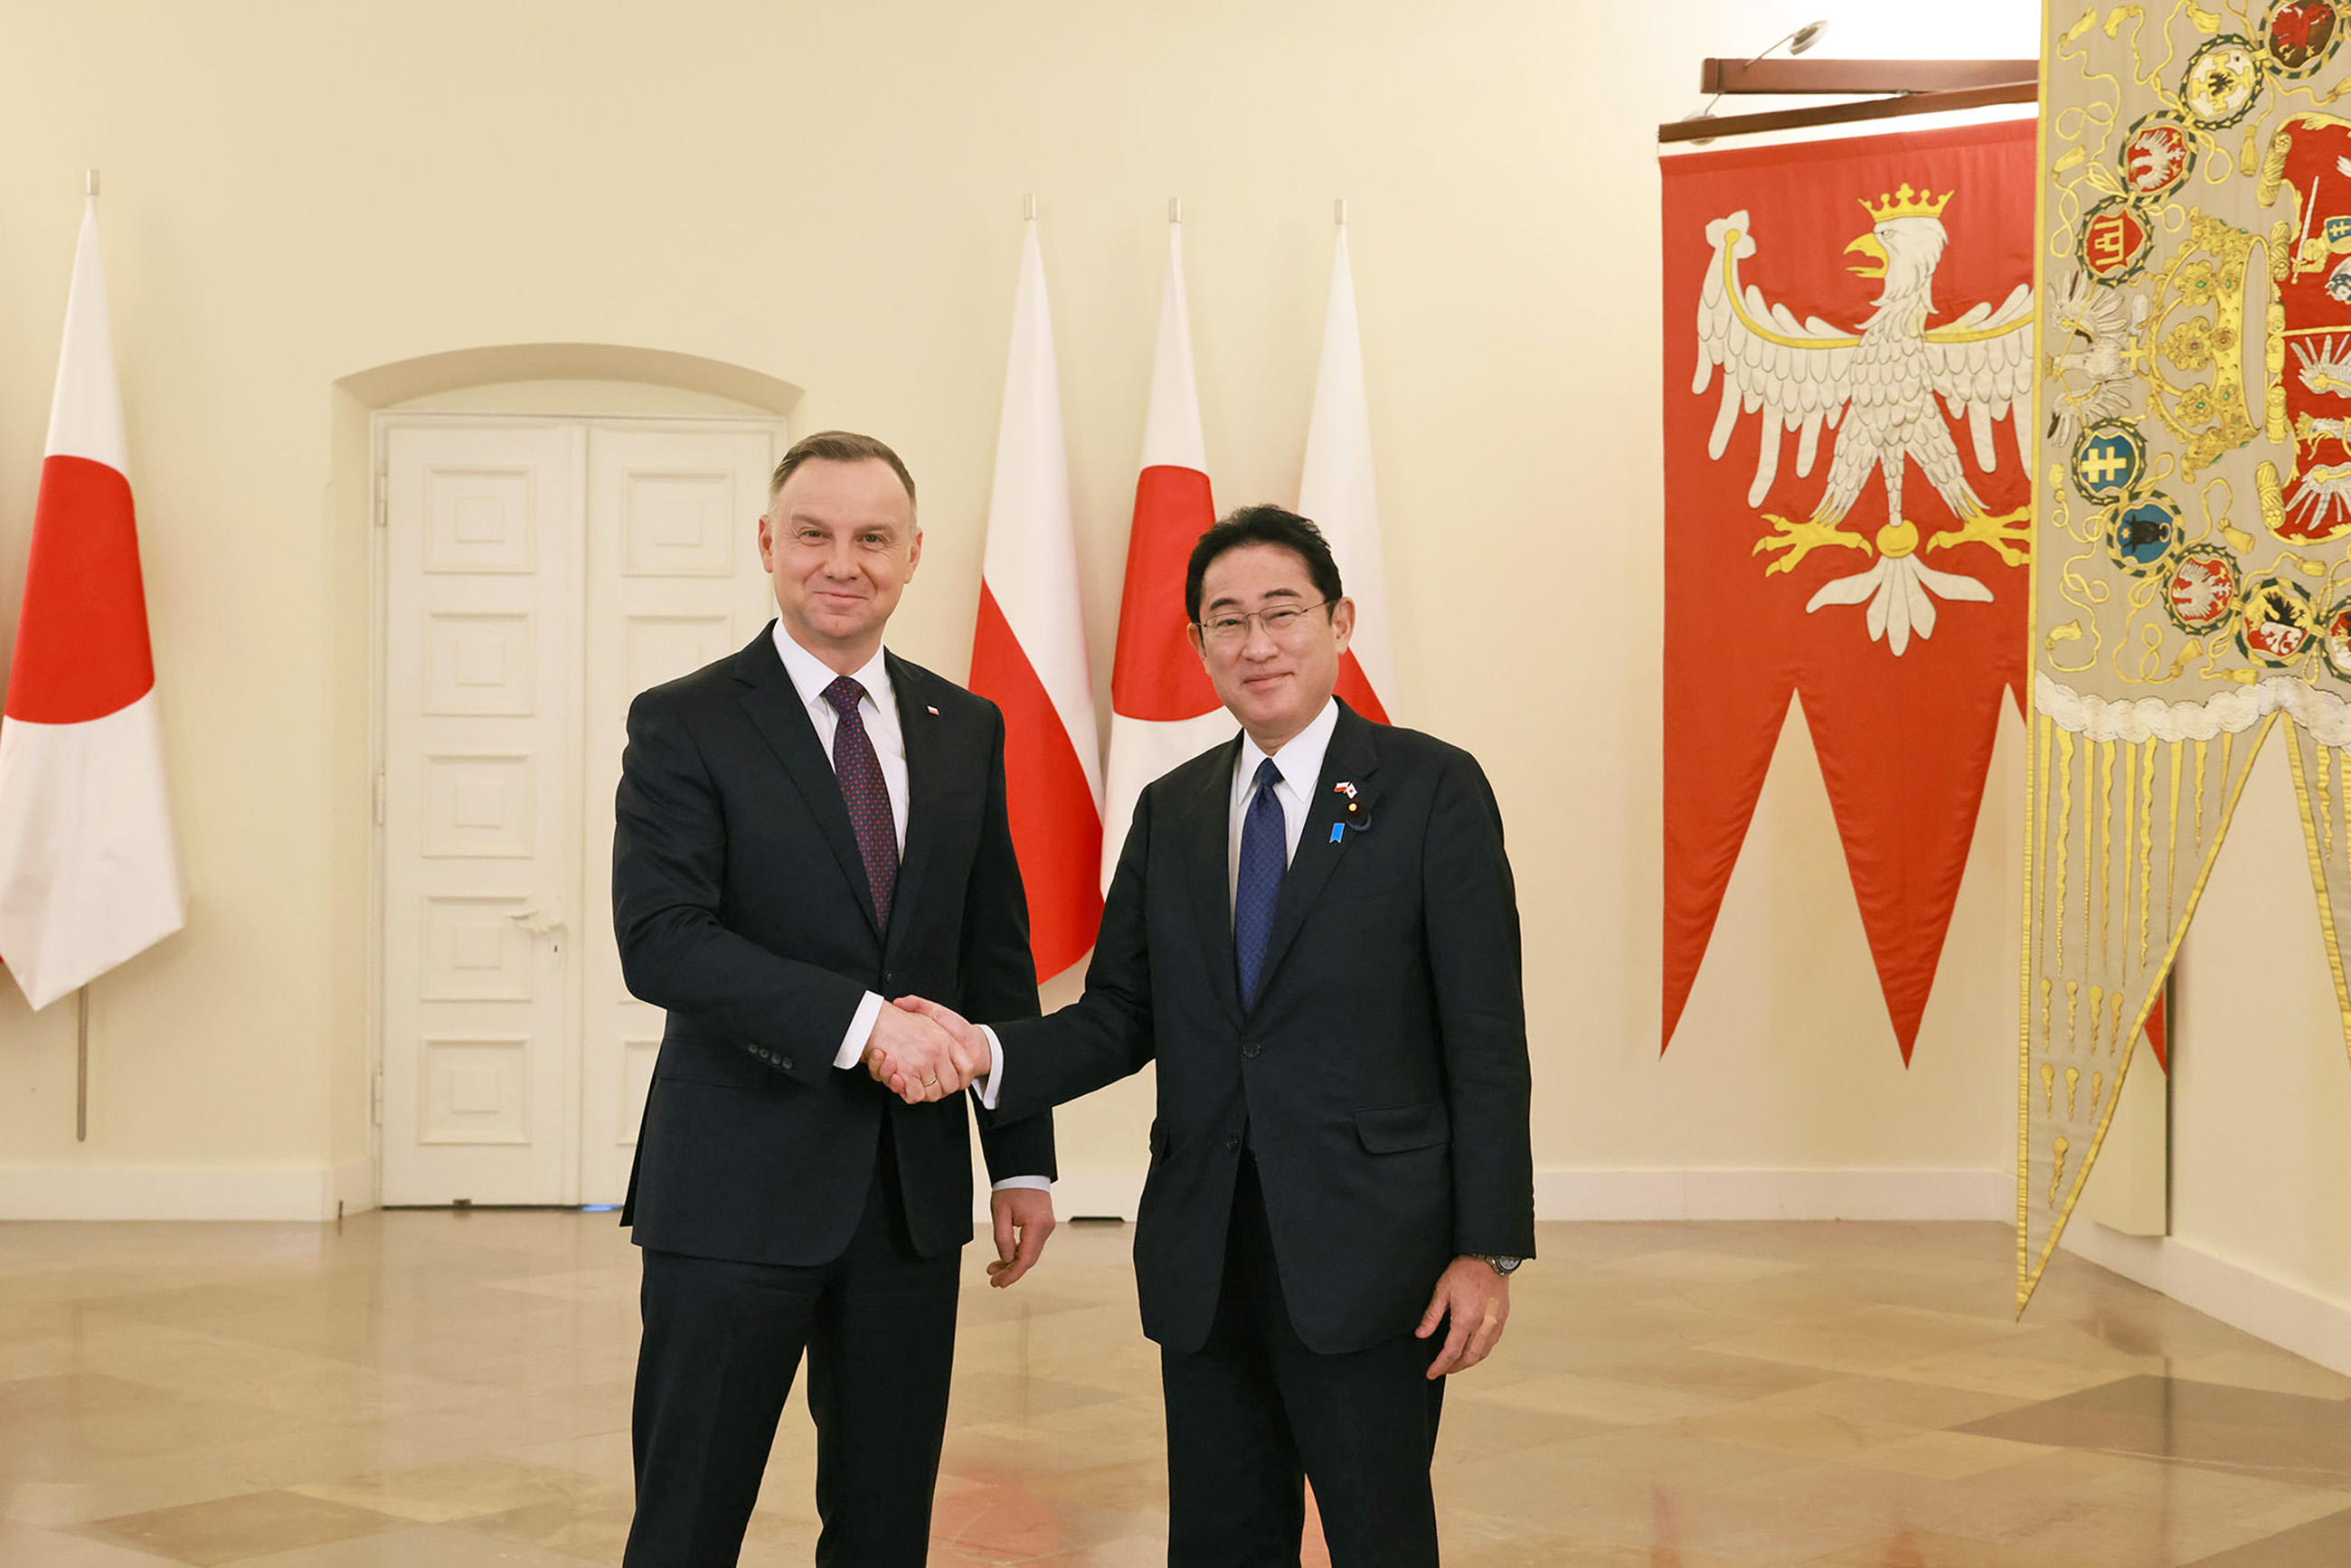 Prime Minister Kishida receiving greetings from President Duda of Poland